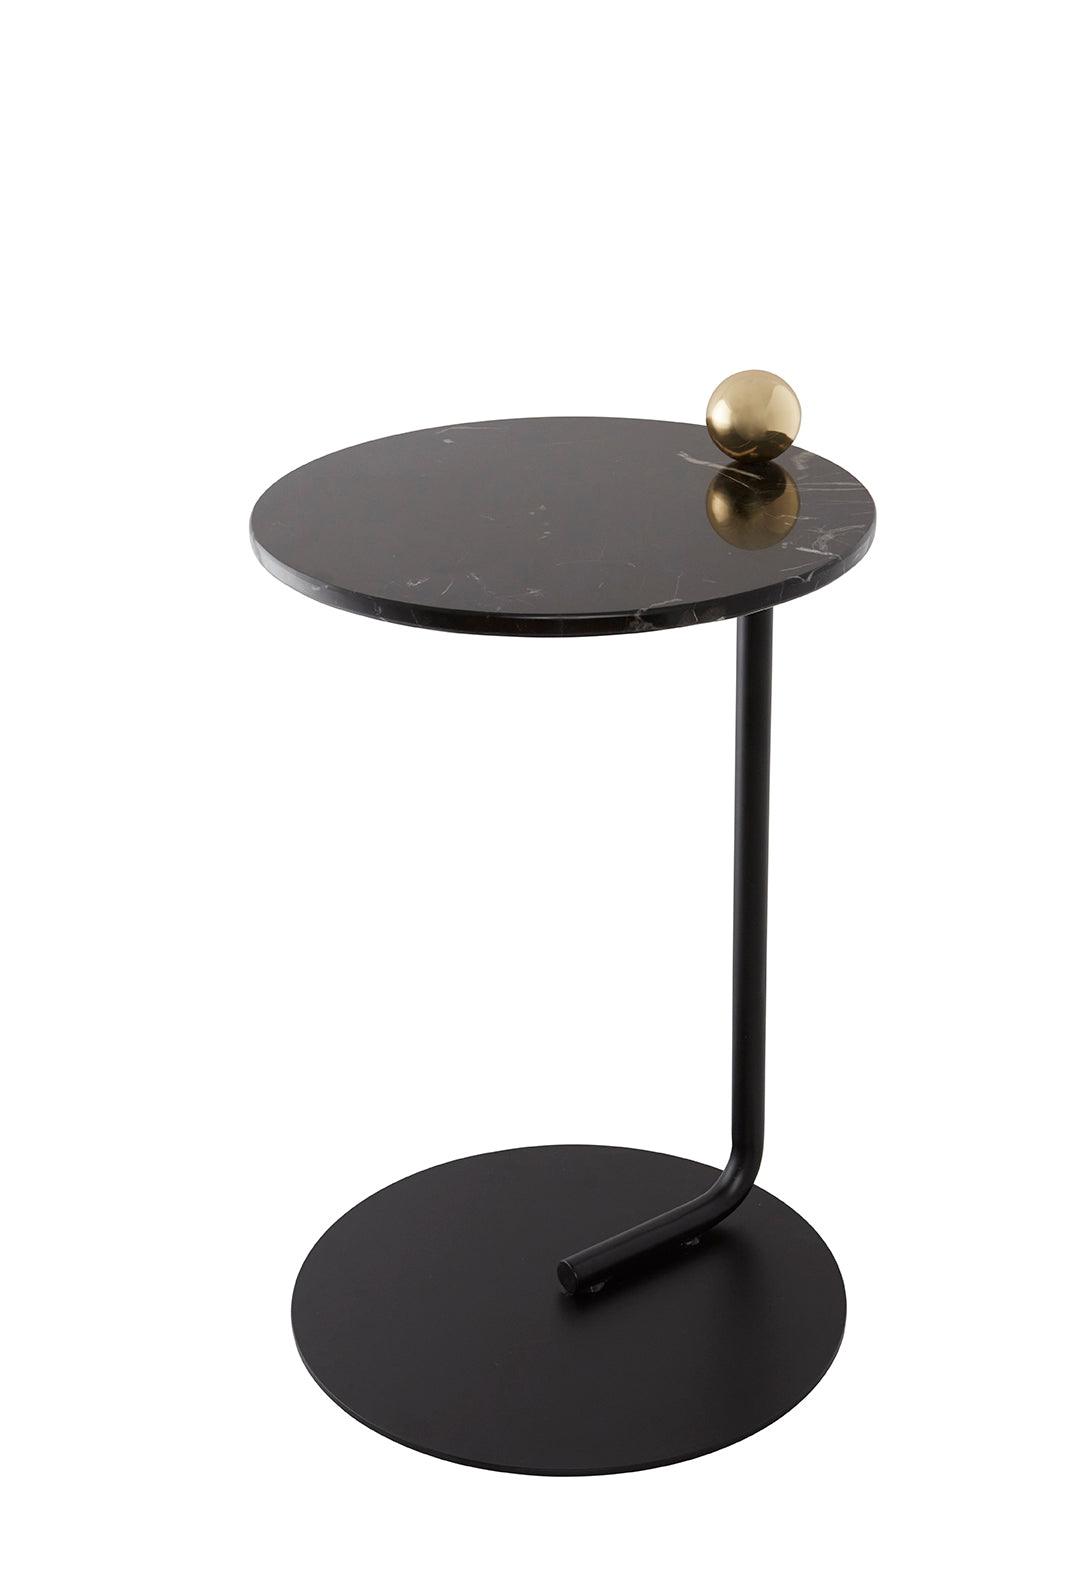 CASTELLUM side table negru / negru, Ø40xH60 CM, AYTM - PARIS14A.RO